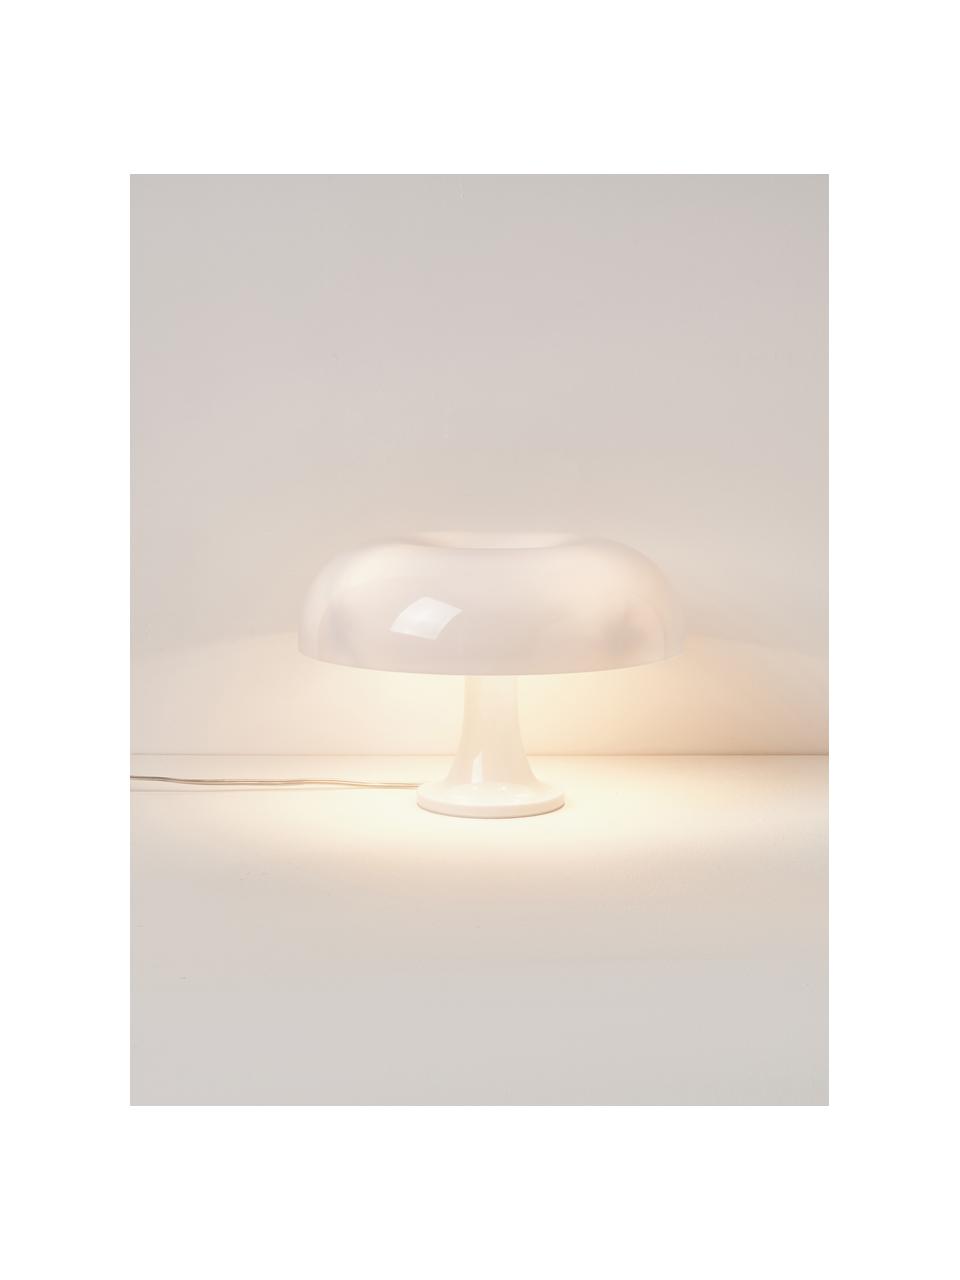 Tafellamp Nessino, Polycarbonaat, Wit, Ø 32 x H 22 cm